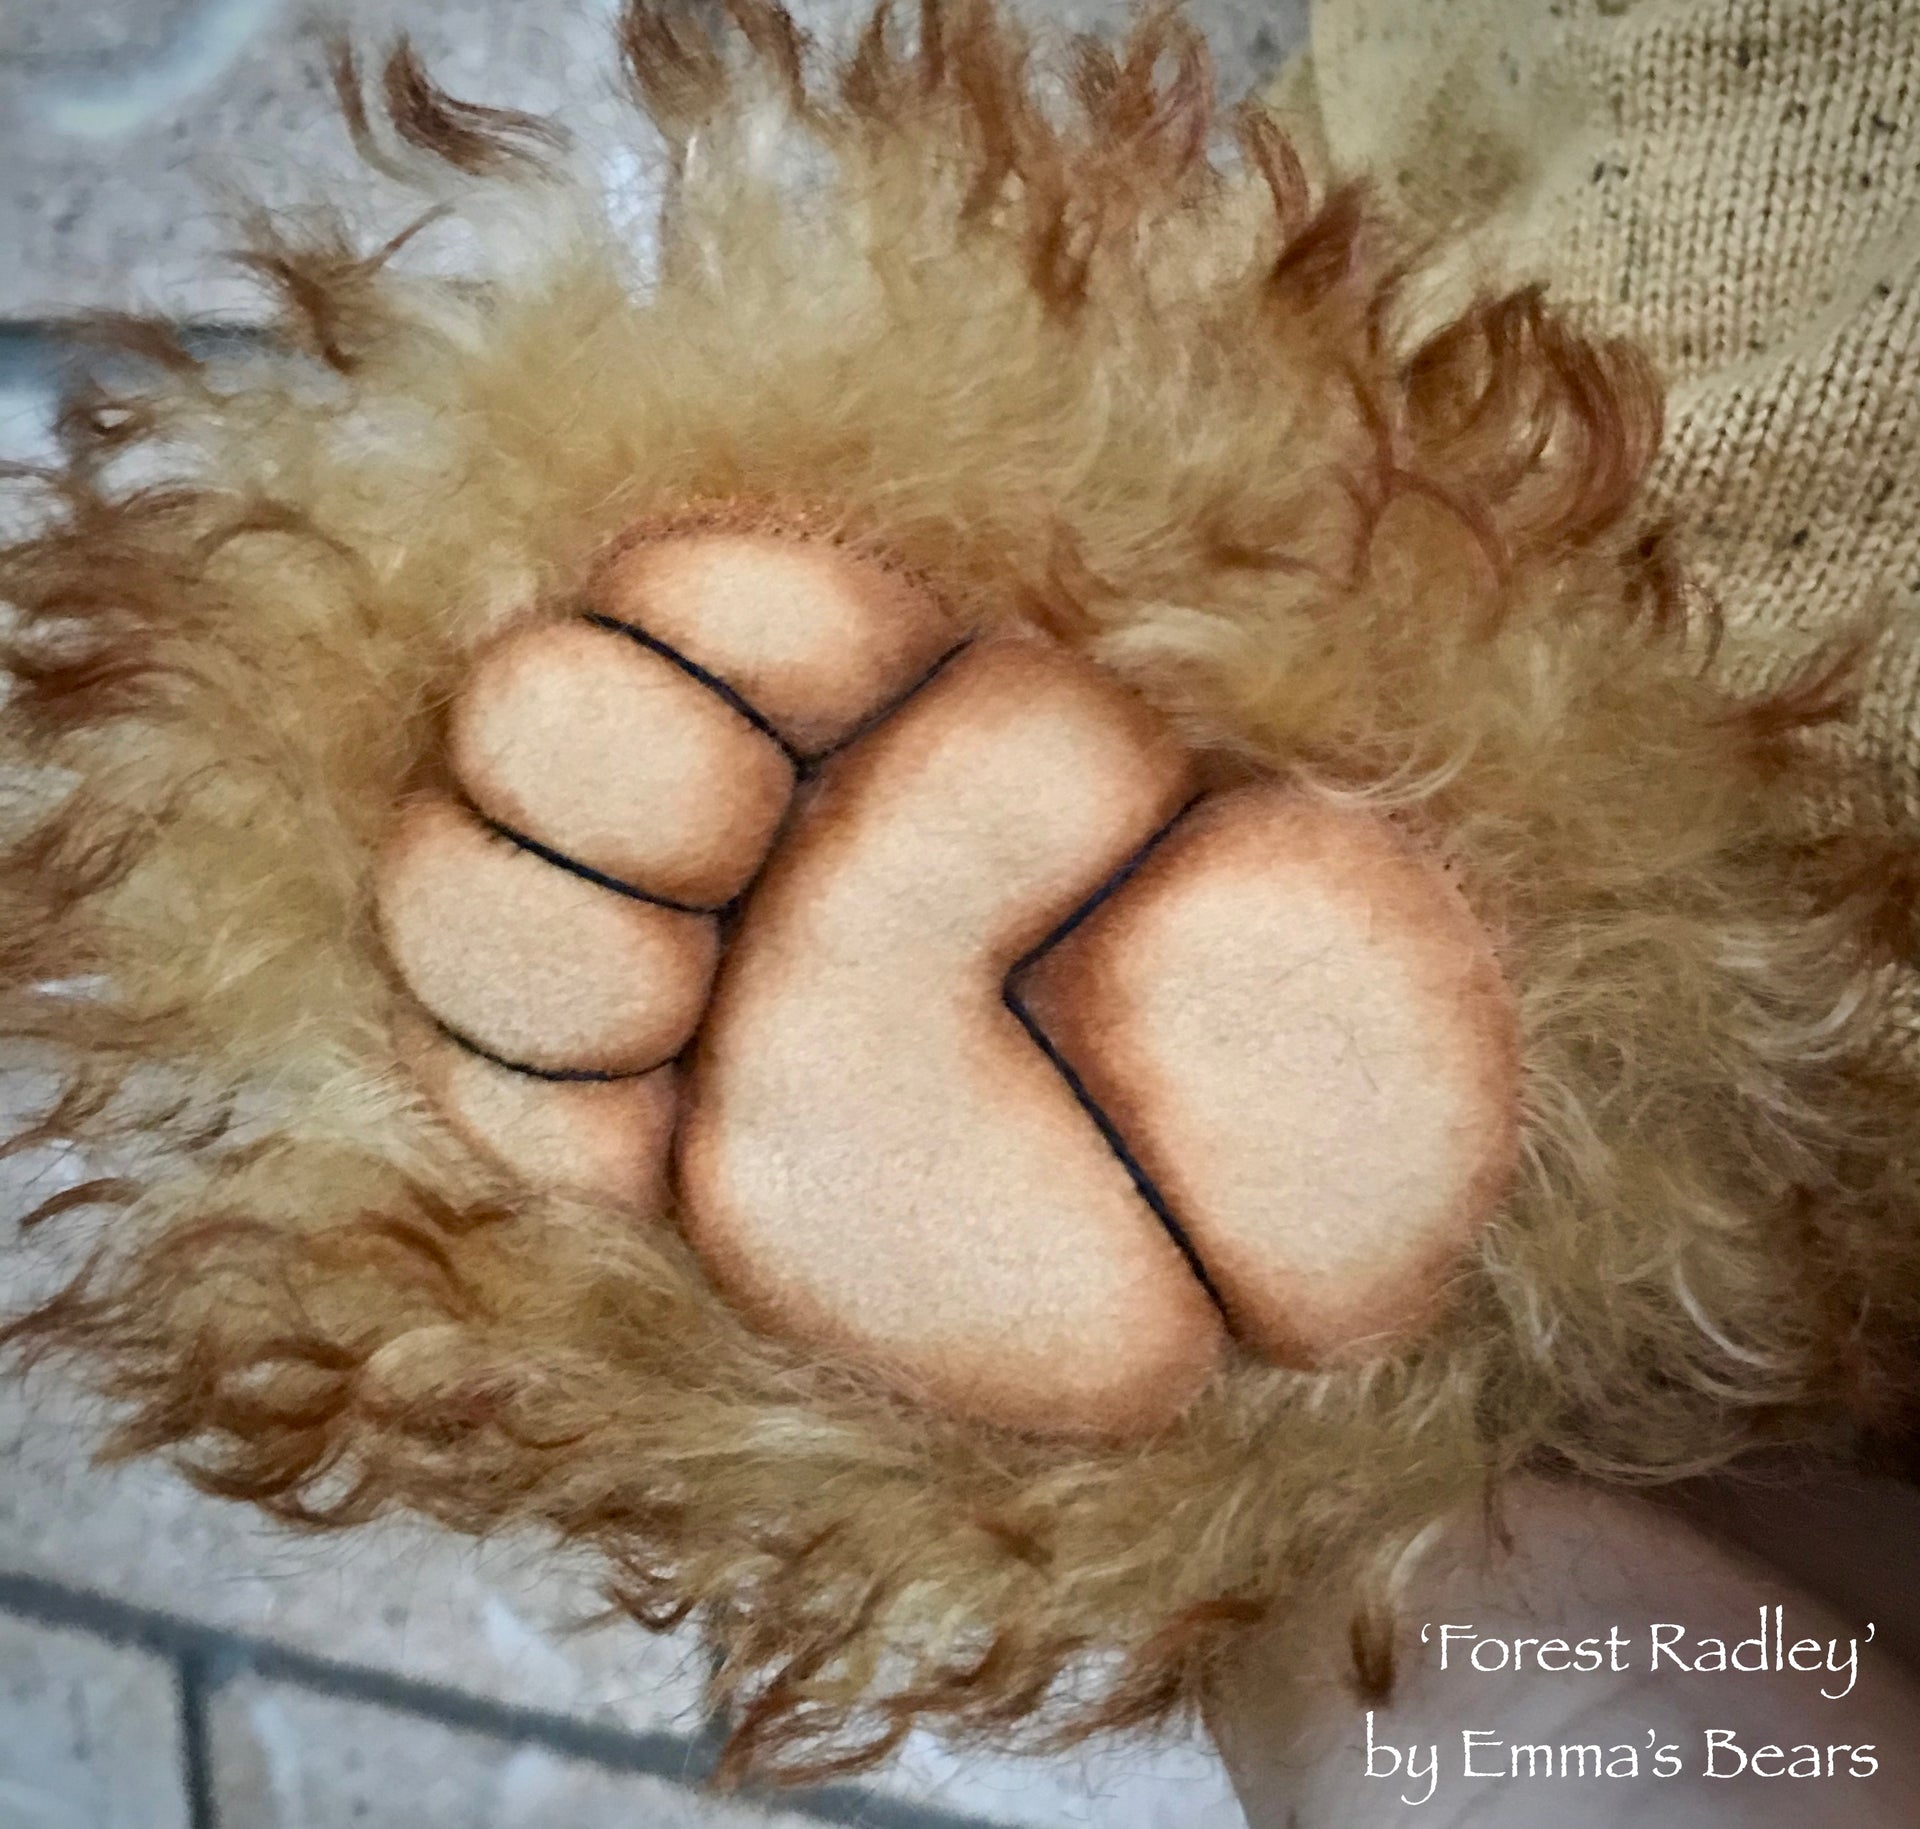 Forest Radley - 18" Hand Dyed Mohair Toddler Artist Bear by Emma's Bears - OOAK